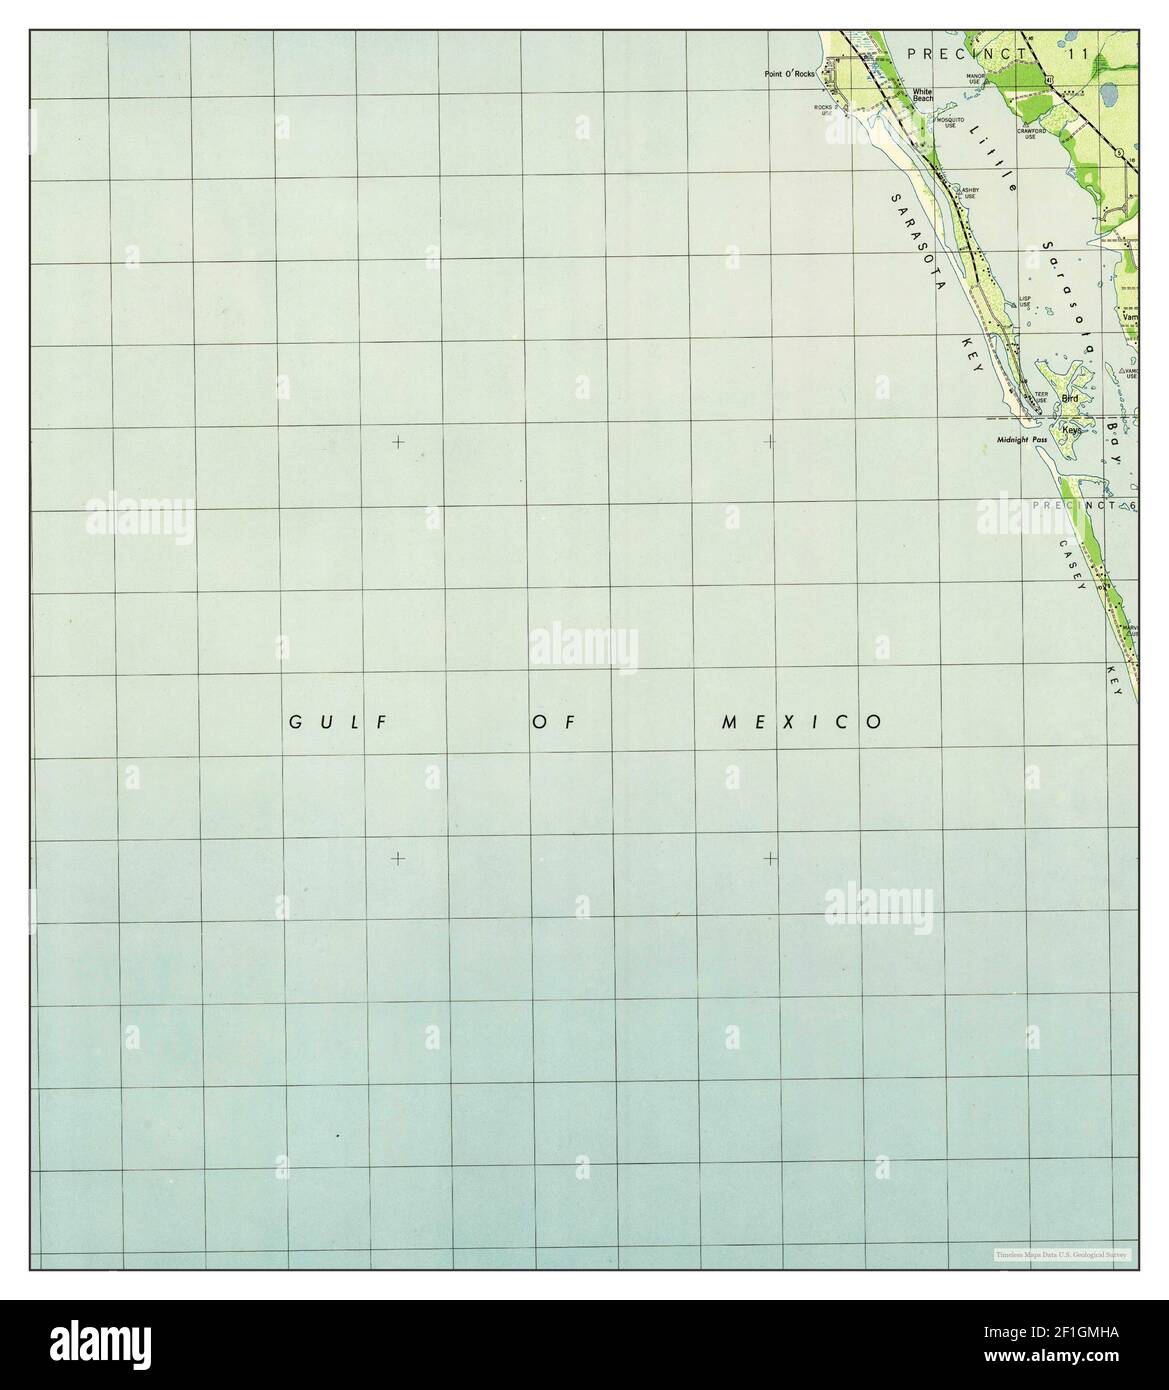 Bird Keys, Florida, map 1944, 1:31680, United States of America by Timeless Maps, data U.S. Geological Survey Stock Photo